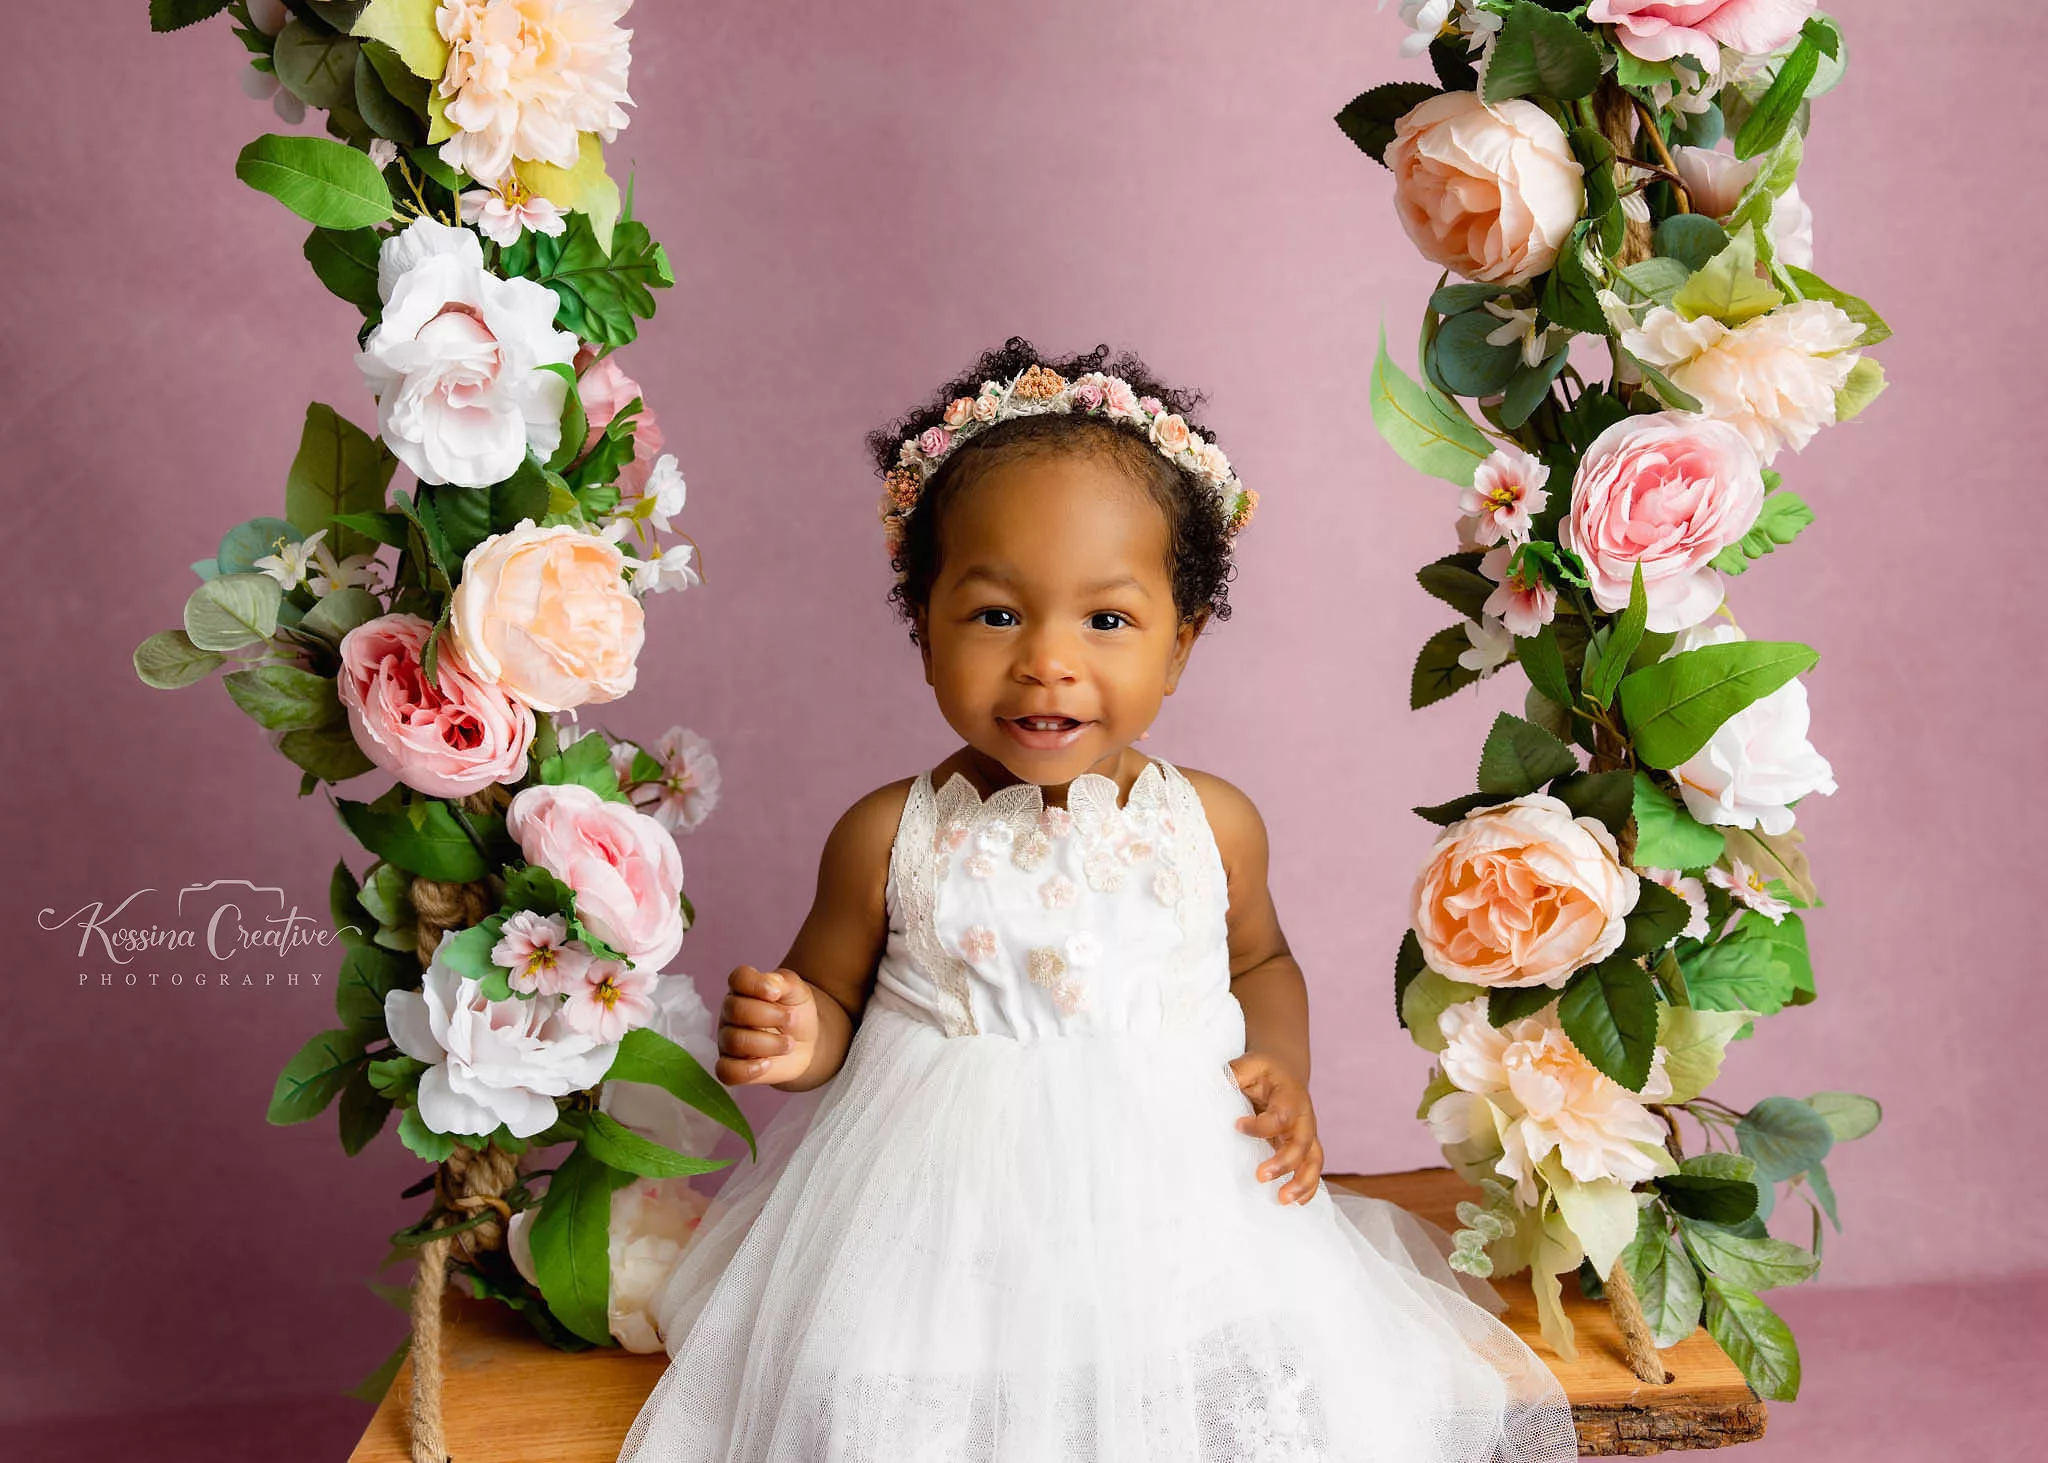 Orlando Girl Cake Smash 1st Birthday Photographer Photo Studio flowers wing boho white dress